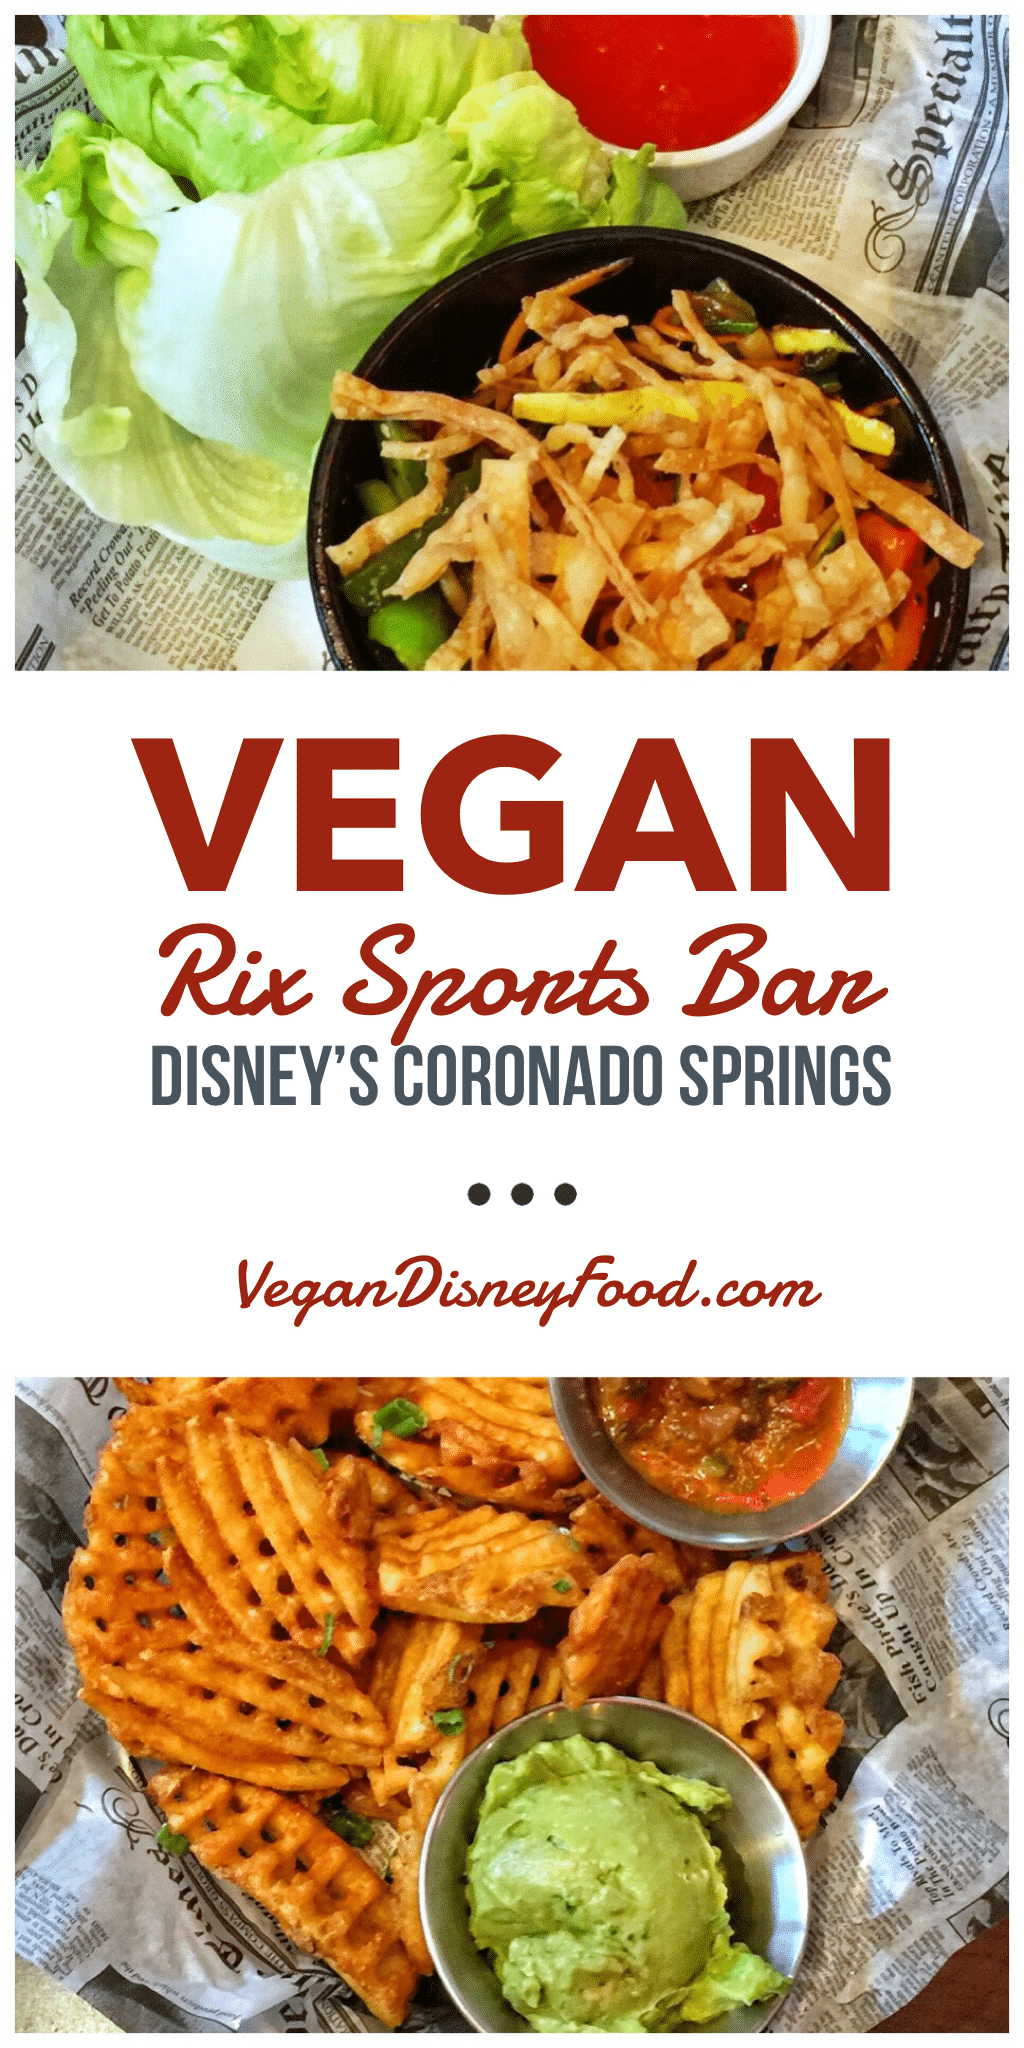 Your Comprehensive Guide to Vegan Disney Food Options at Rix Sports Bar & Grill in Disney’s Coronado Springs Resort